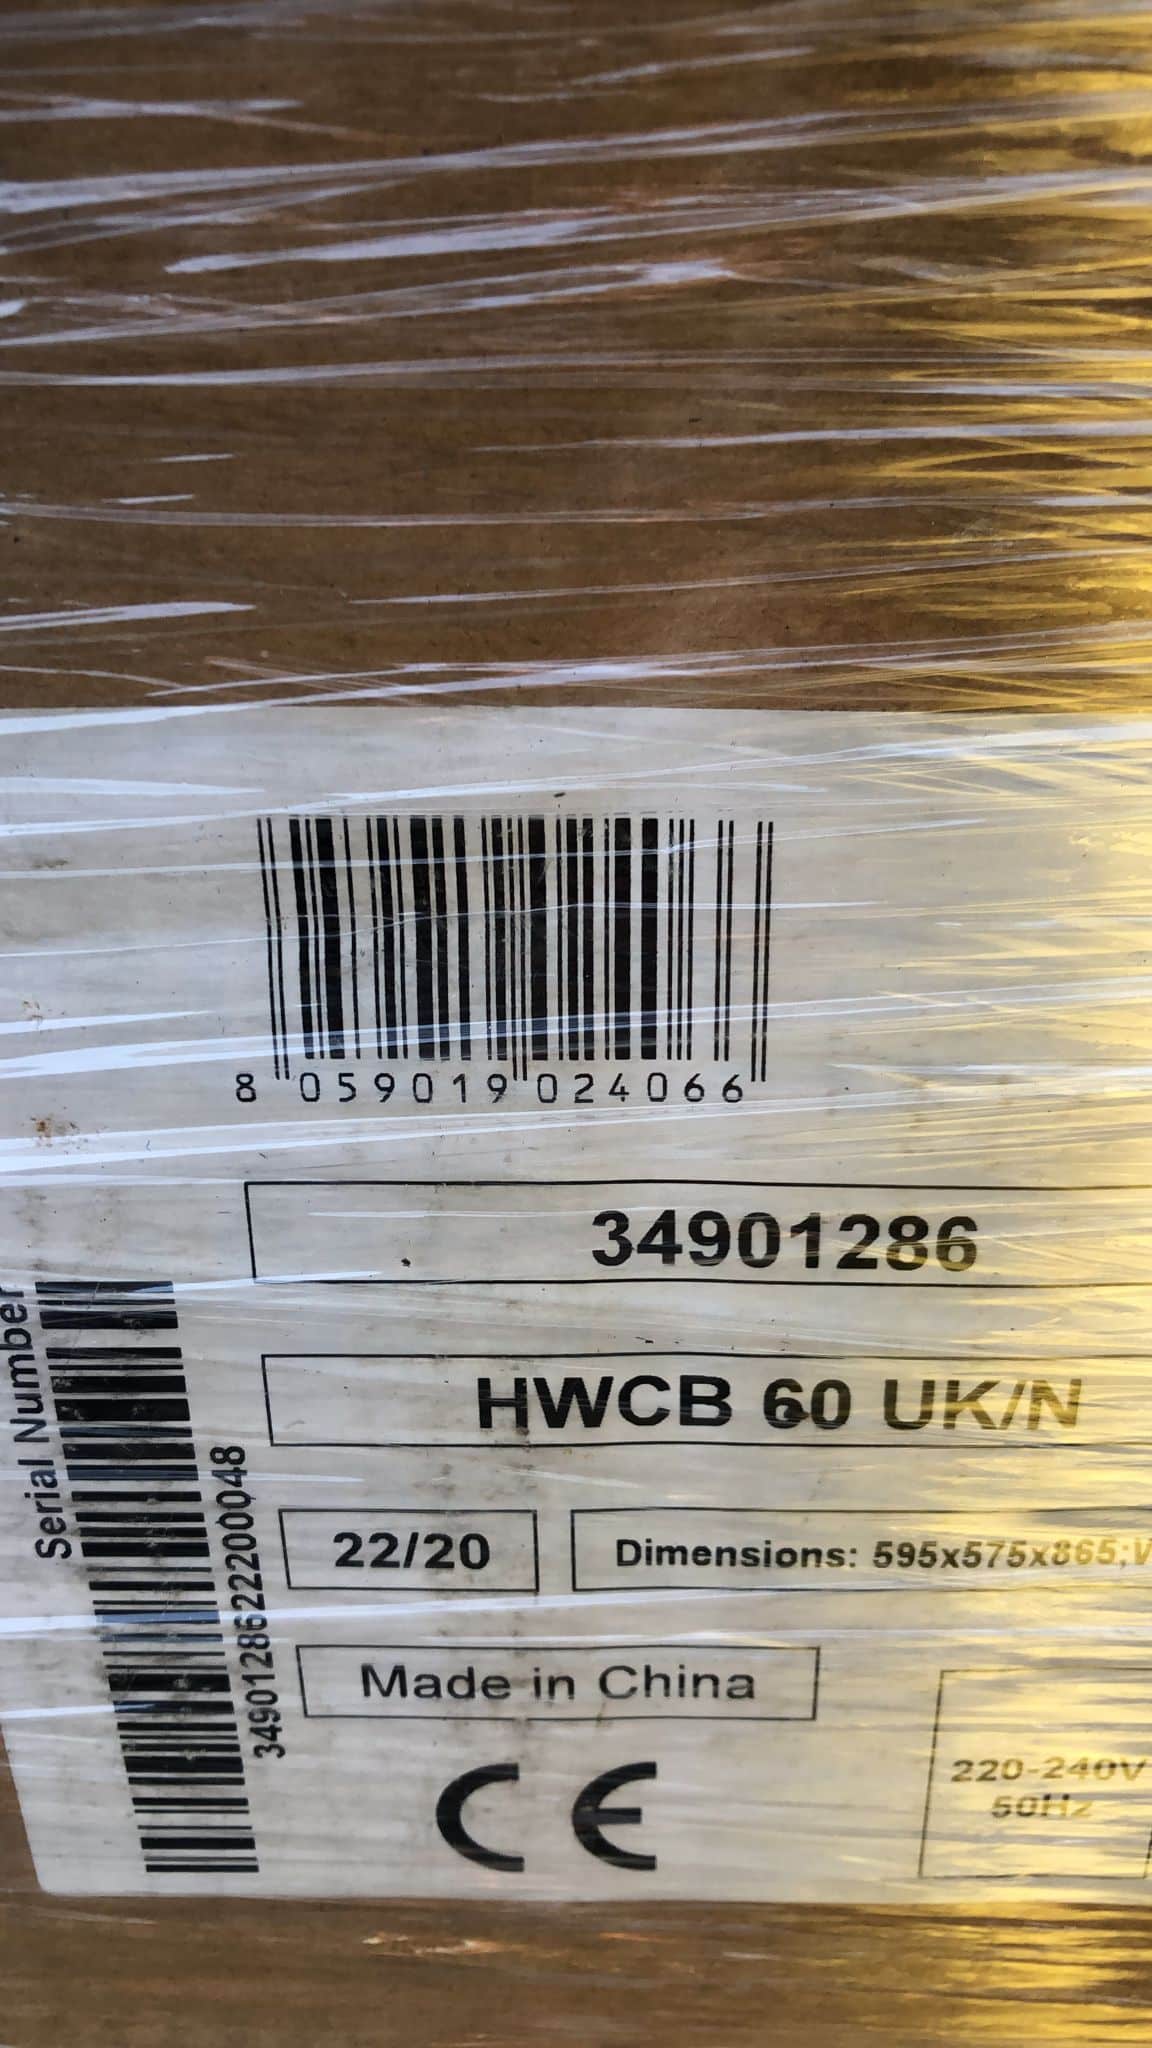 Hoover HWCB 60 UK/N Wine Cooler H-WINE 300-4066